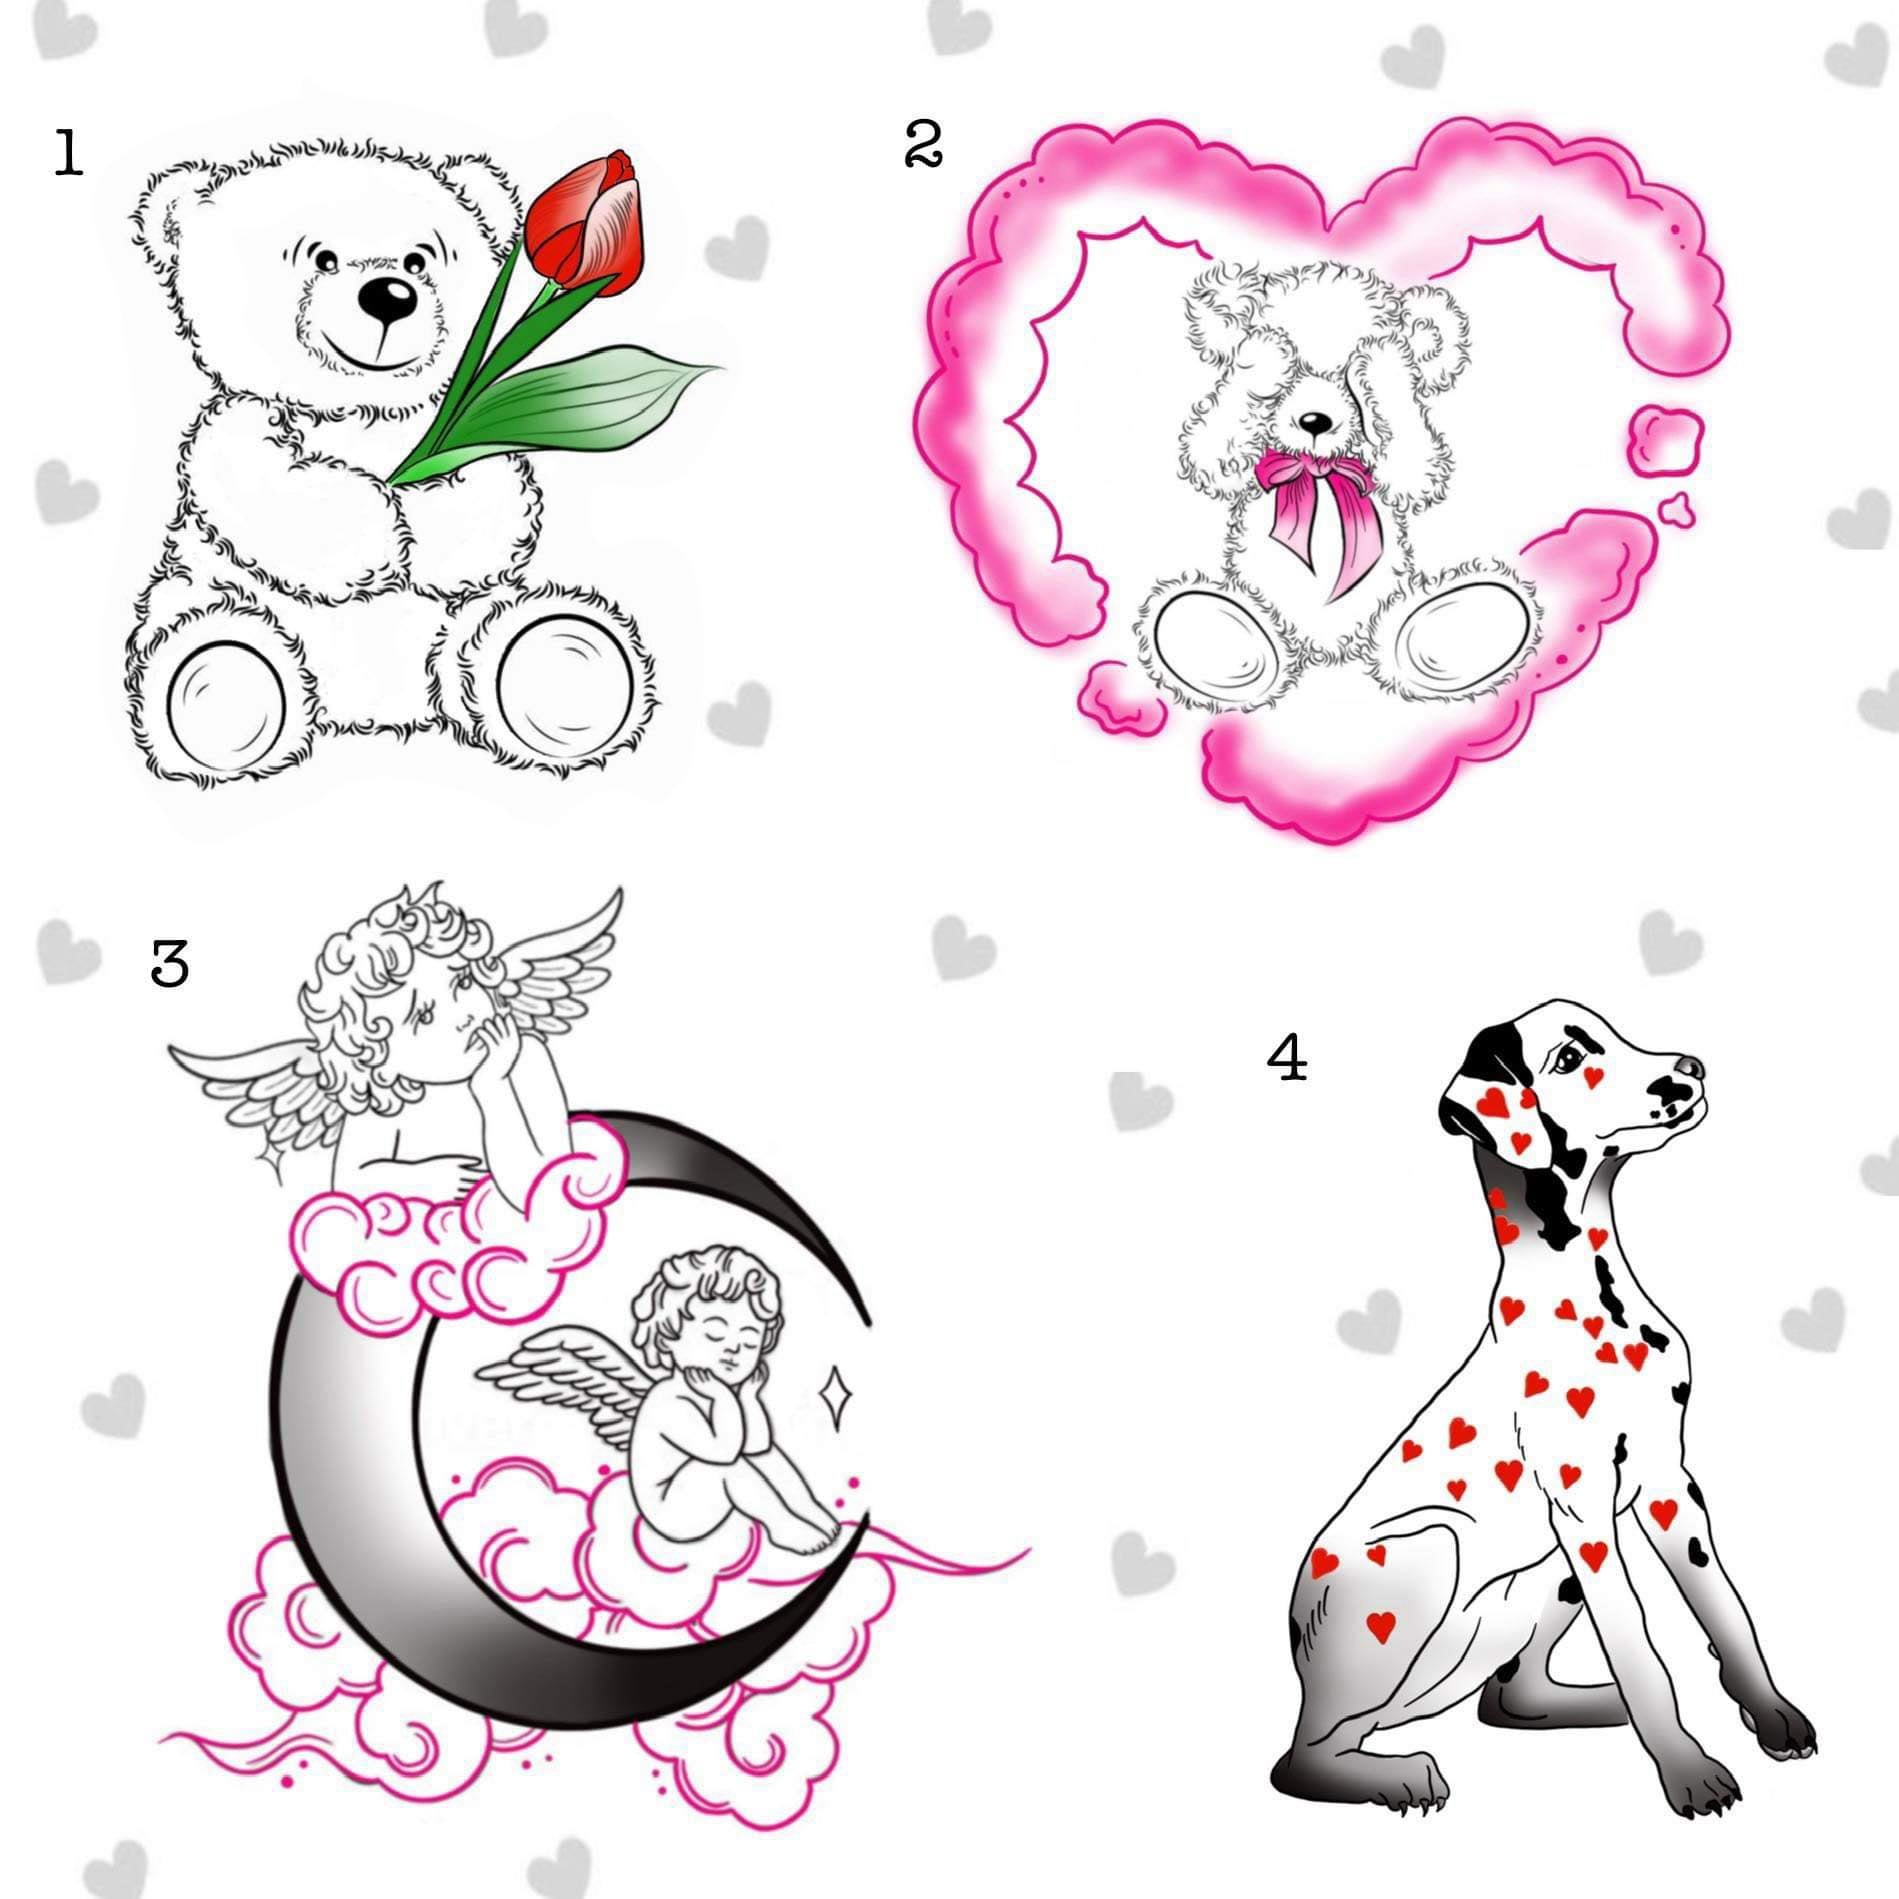 Valentine's (and Anti-Valentine's) inspired designs by Anastasia